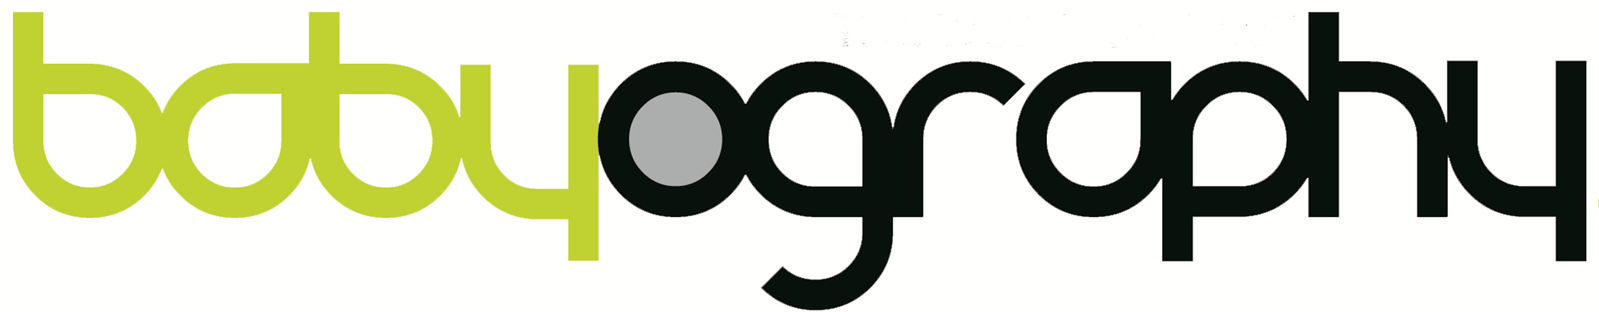 babyography_logo